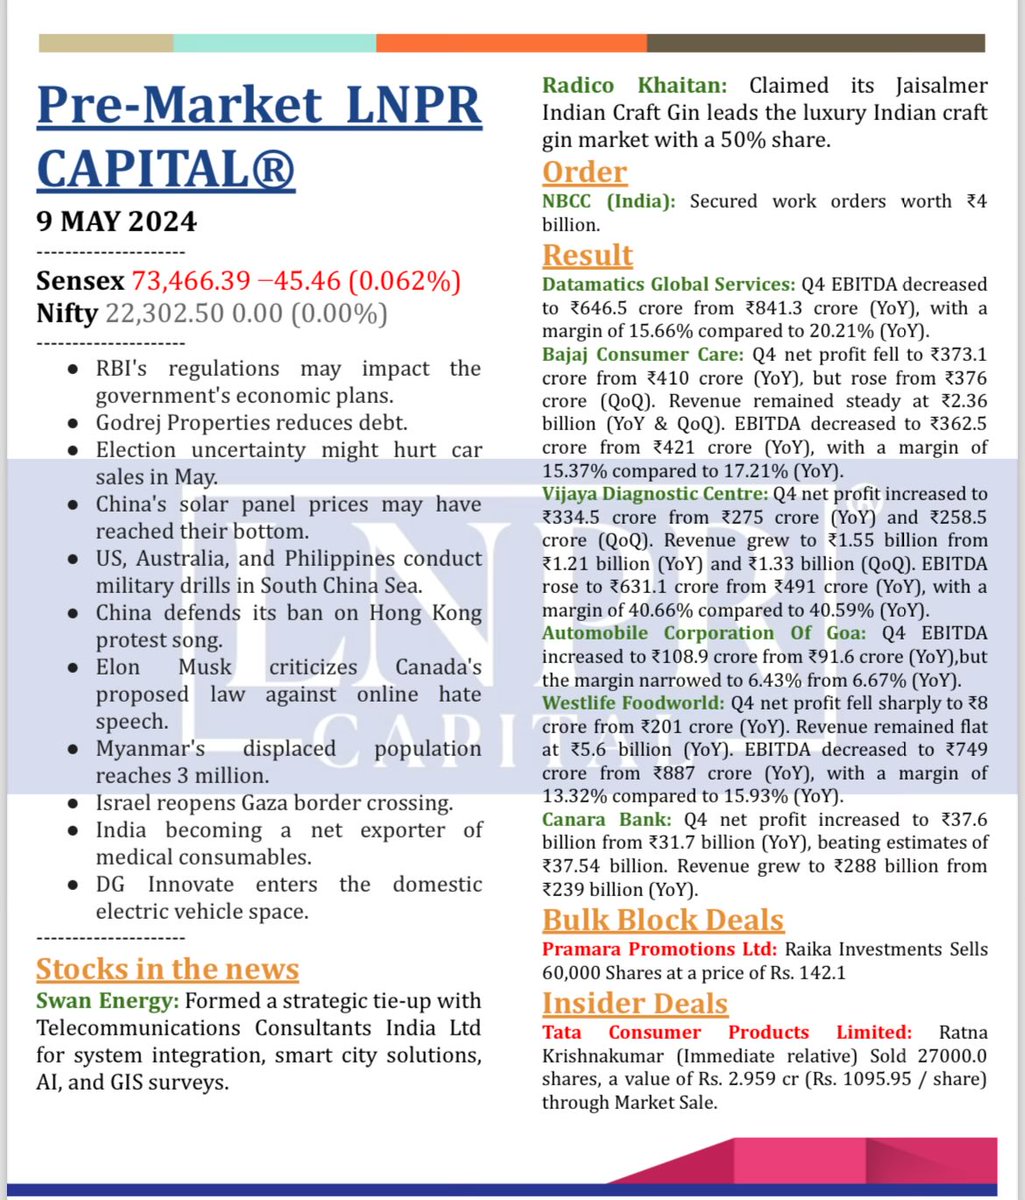 Pre Market Updates by LNPR (09/05/24) #LNPRPreMarketUpdates #LNPRCapital